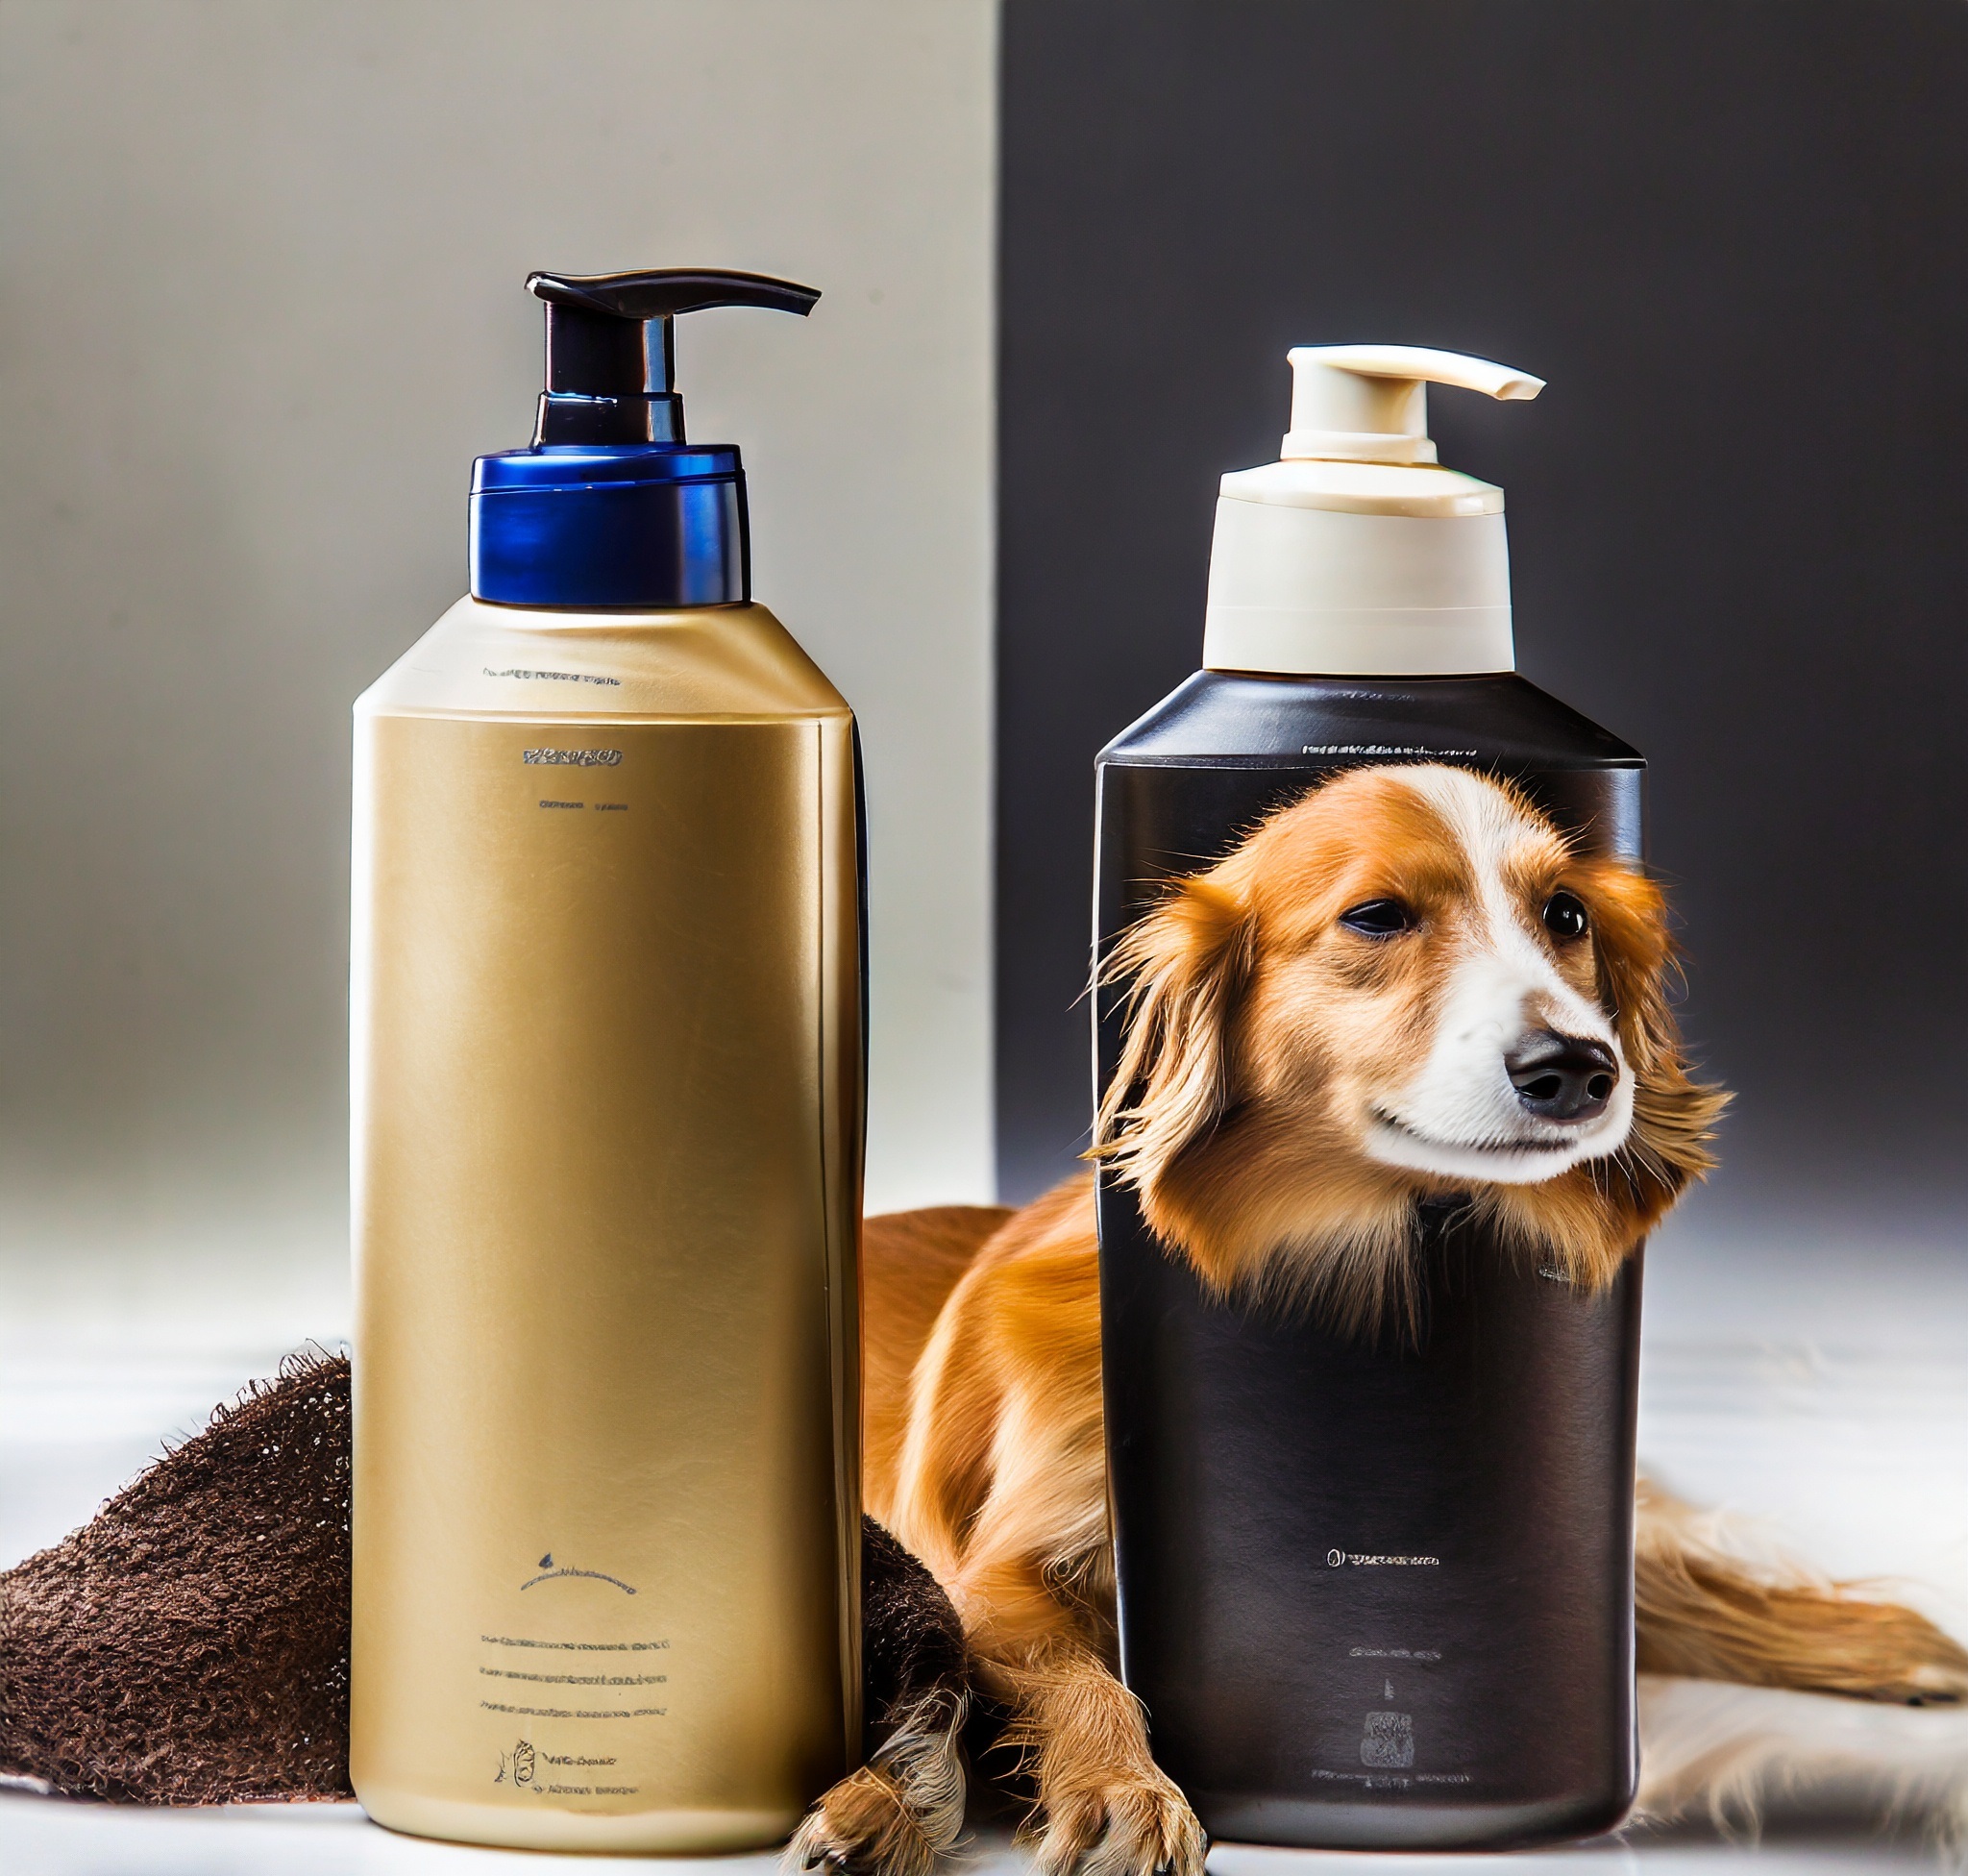 Comparing human shampoo and dog shampoo bottles